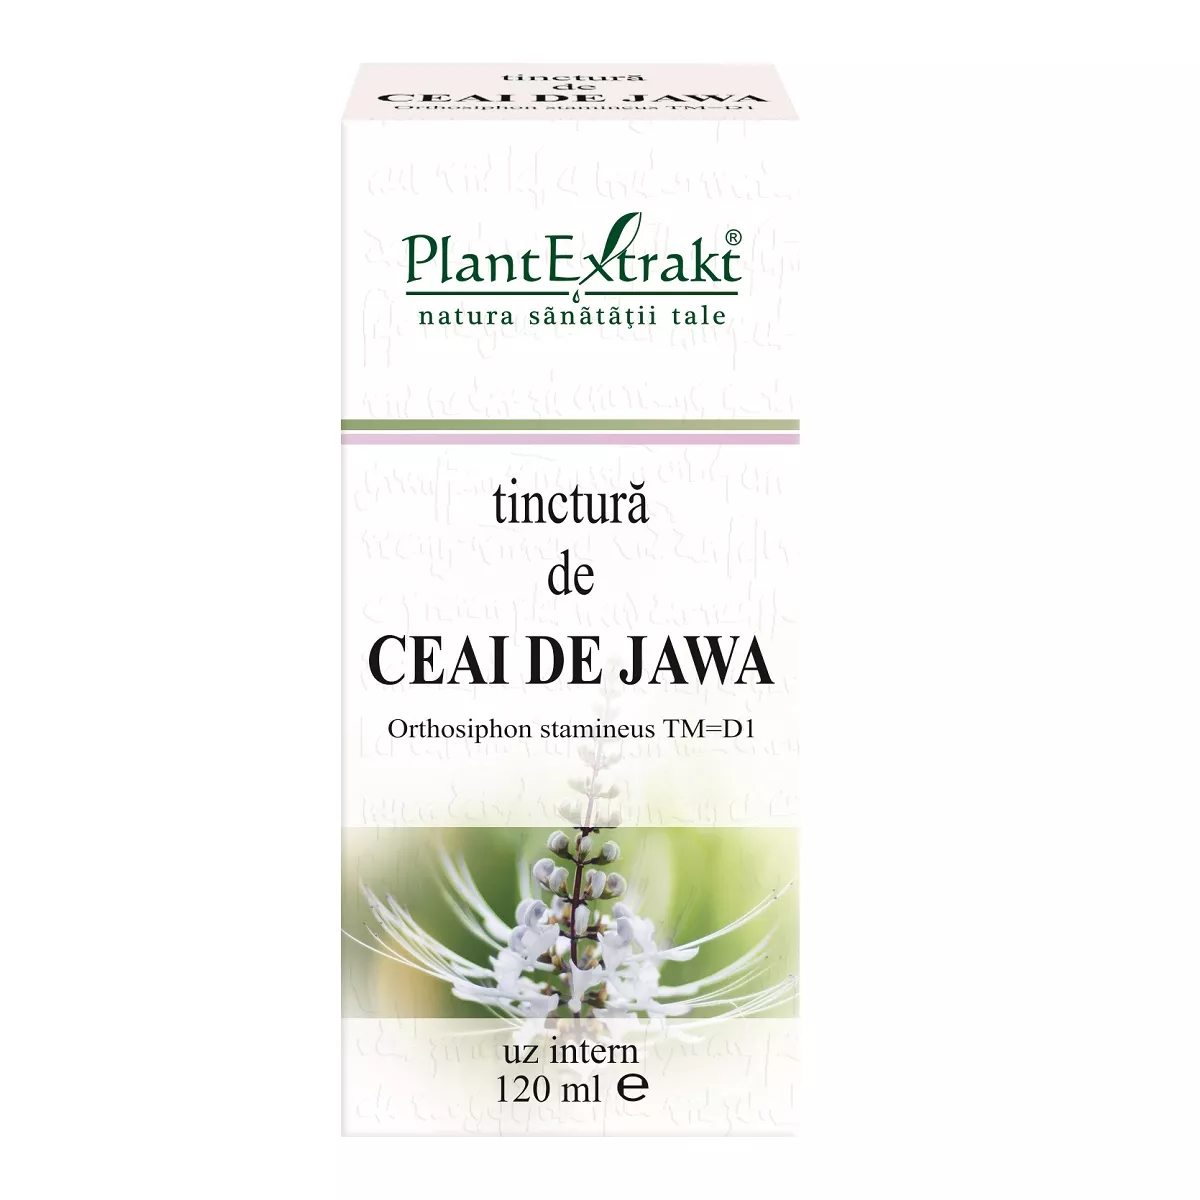 Tinctura de ceai de Jawa, 120 ml, Plantextrakt, [],remediumfarm.ro